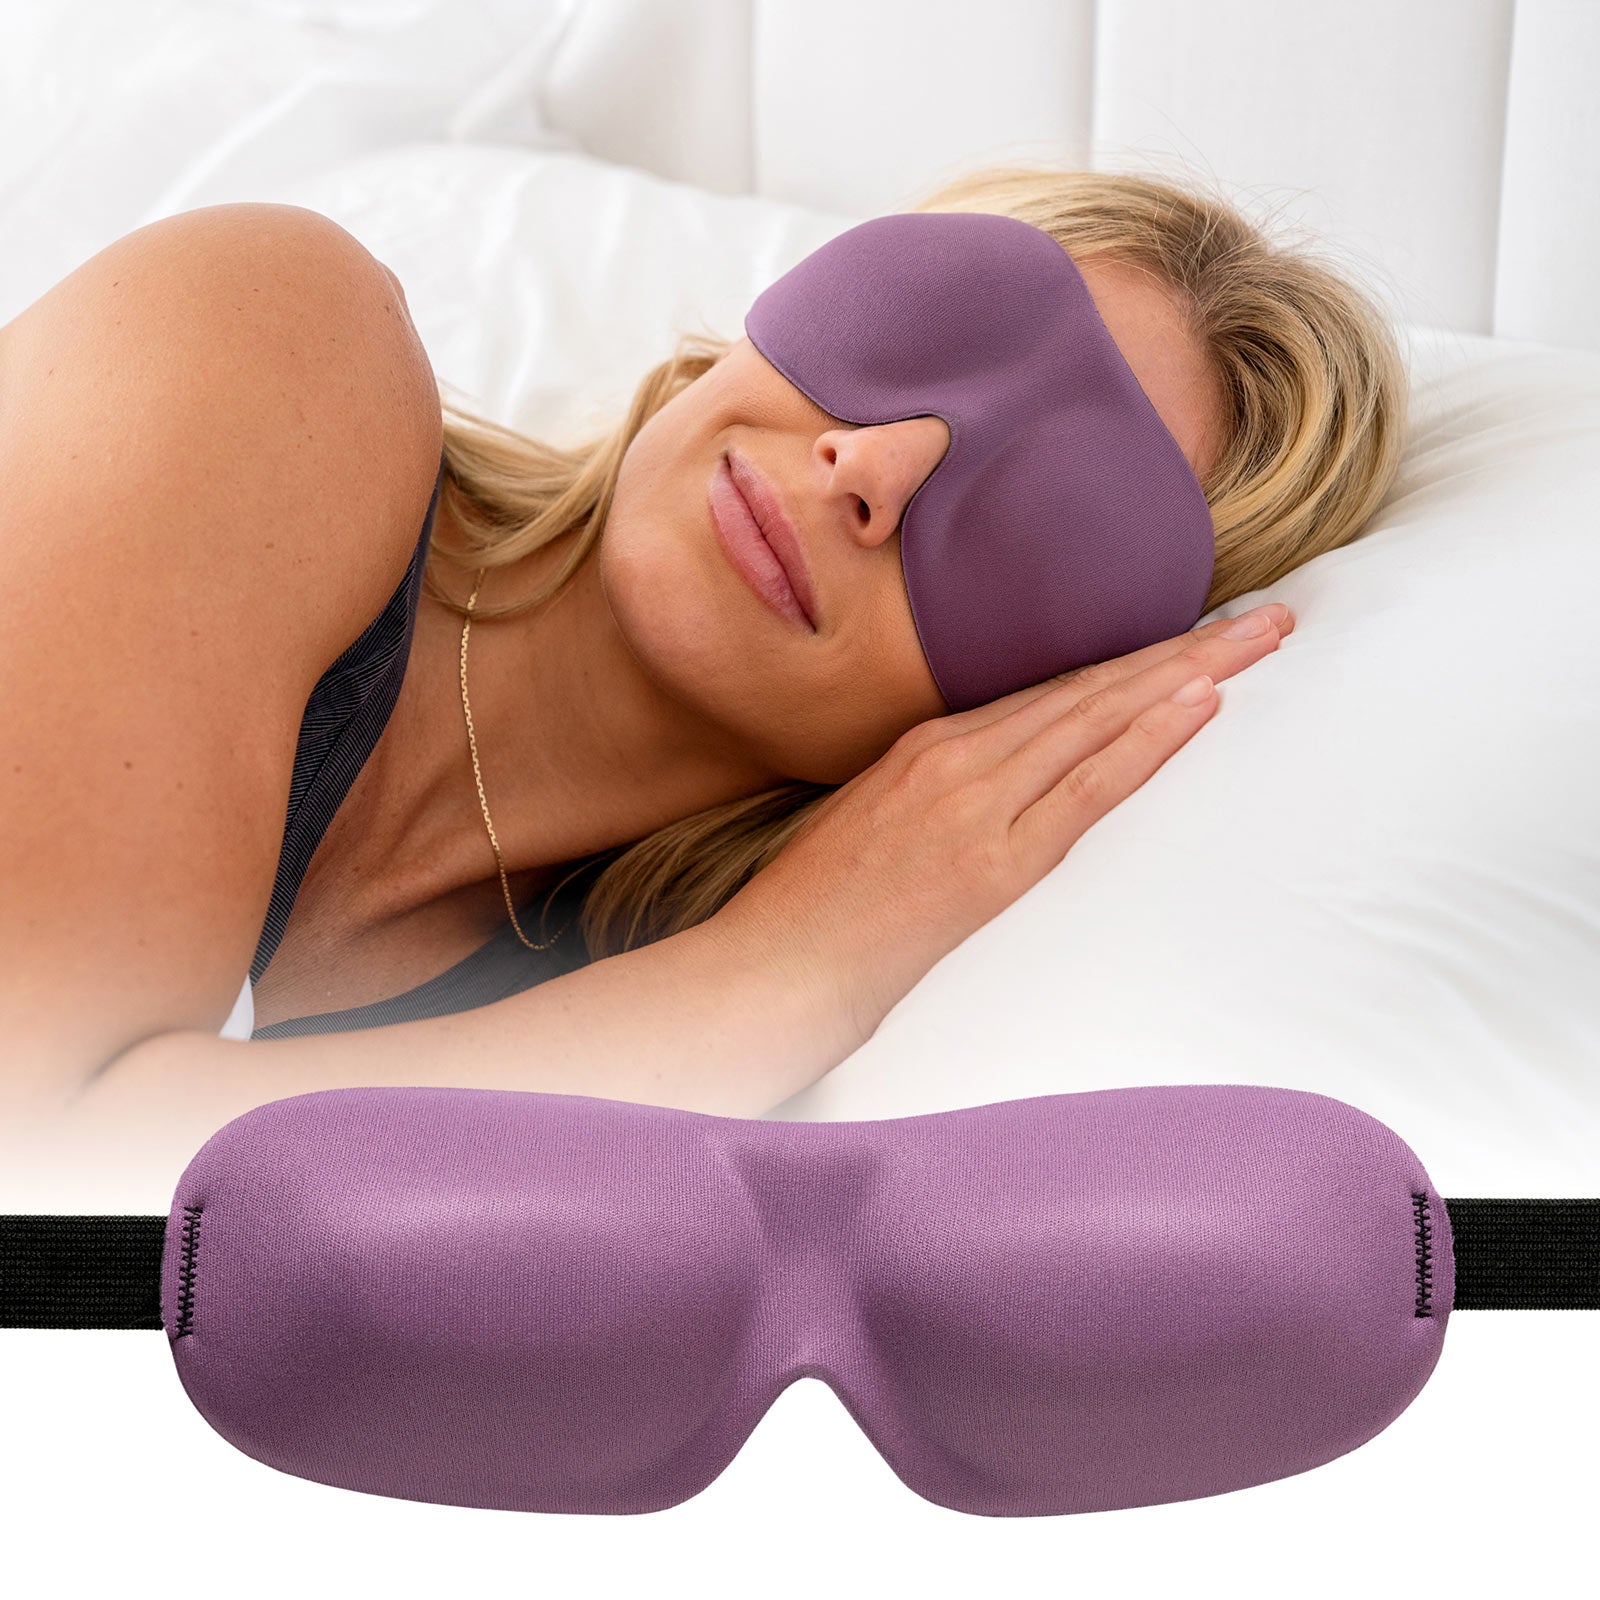 Nidra Deep Rest Luxury Sleep Mask, Contoured Sleep Mask for Women and Men, Purple